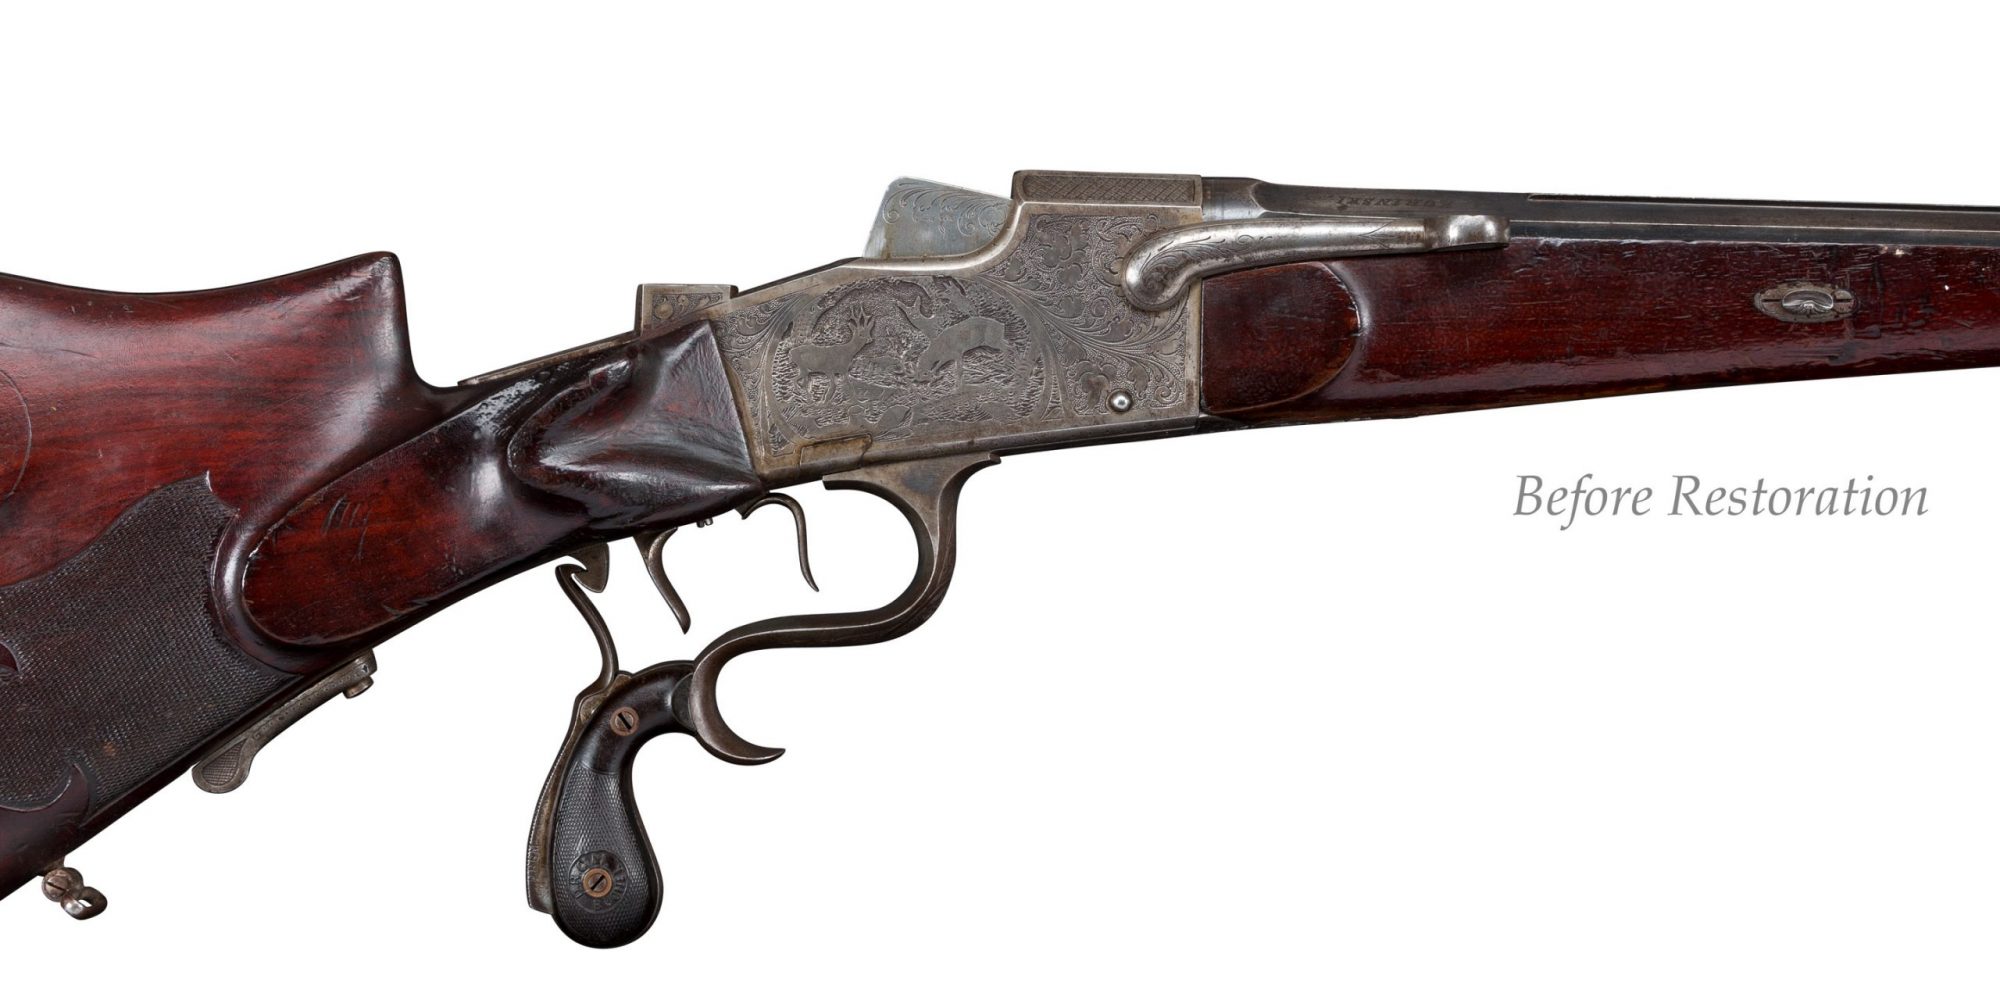 German gun, originally manufactured in the 1920s, before restoration by Turnbull Restoration